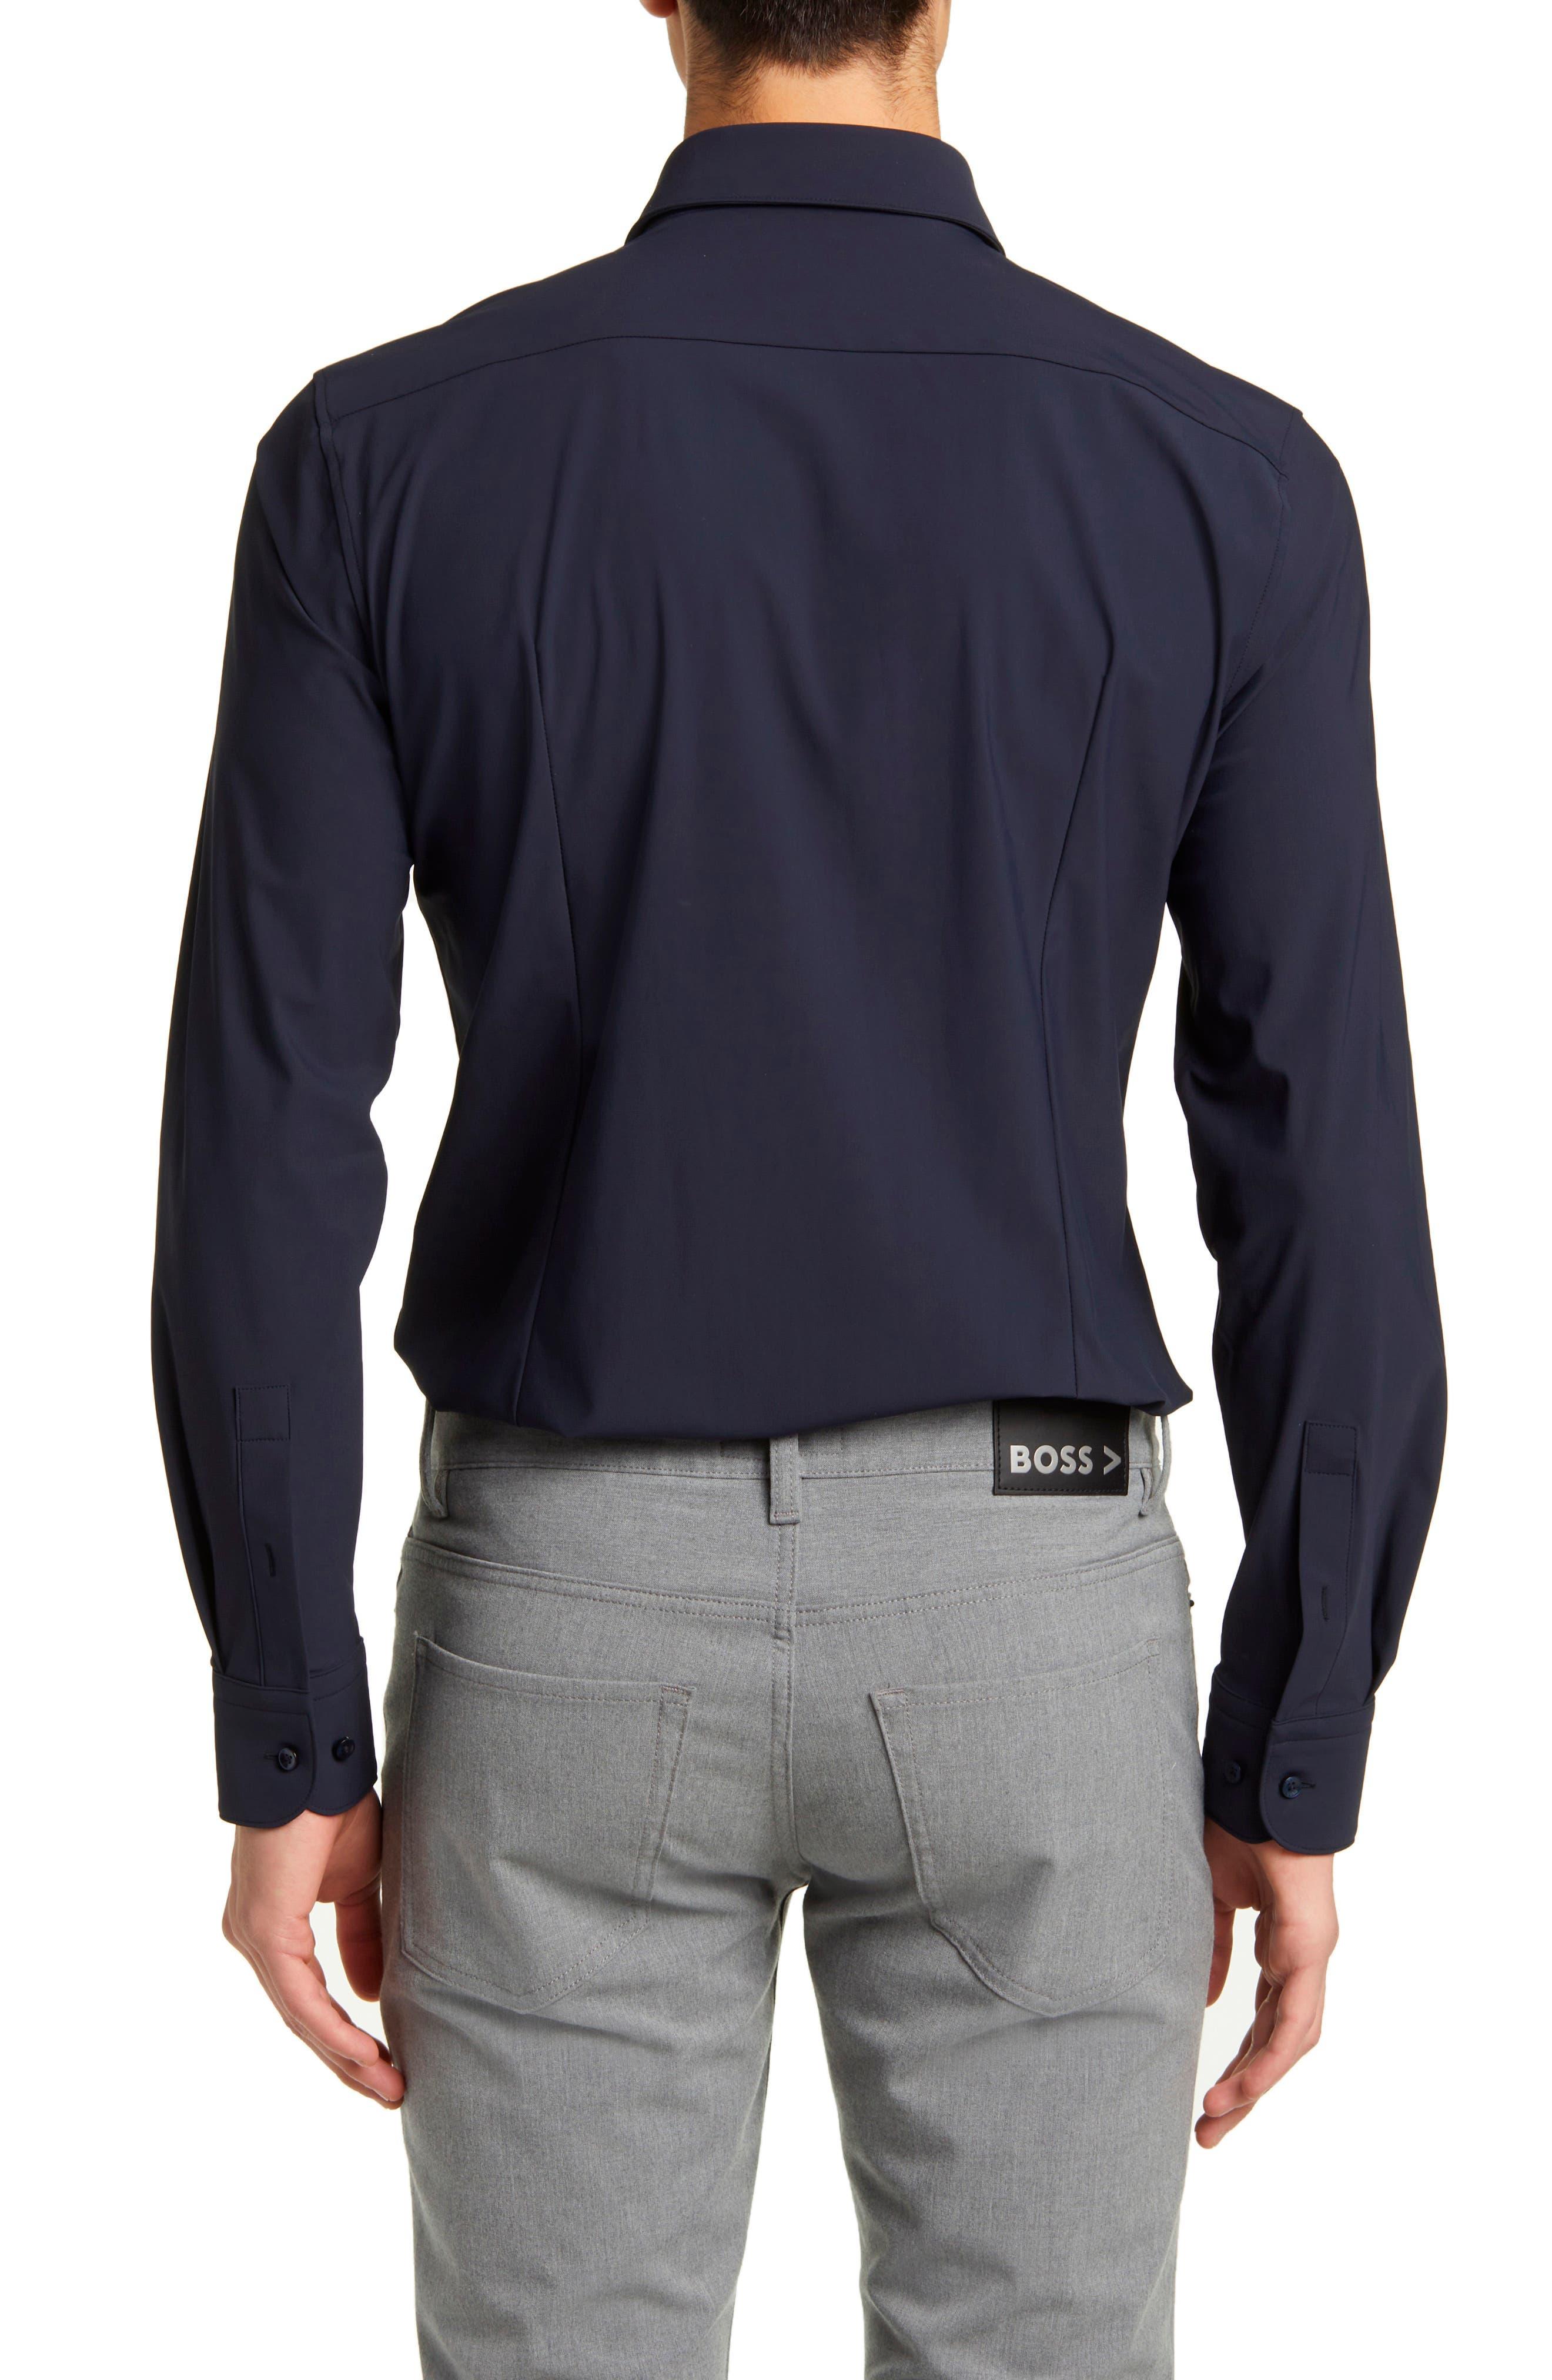 BOSS by HUGO BOSS Hank Slim Fit Solid Navy Performance Dress Shirt in Blue  for Men | Lyst